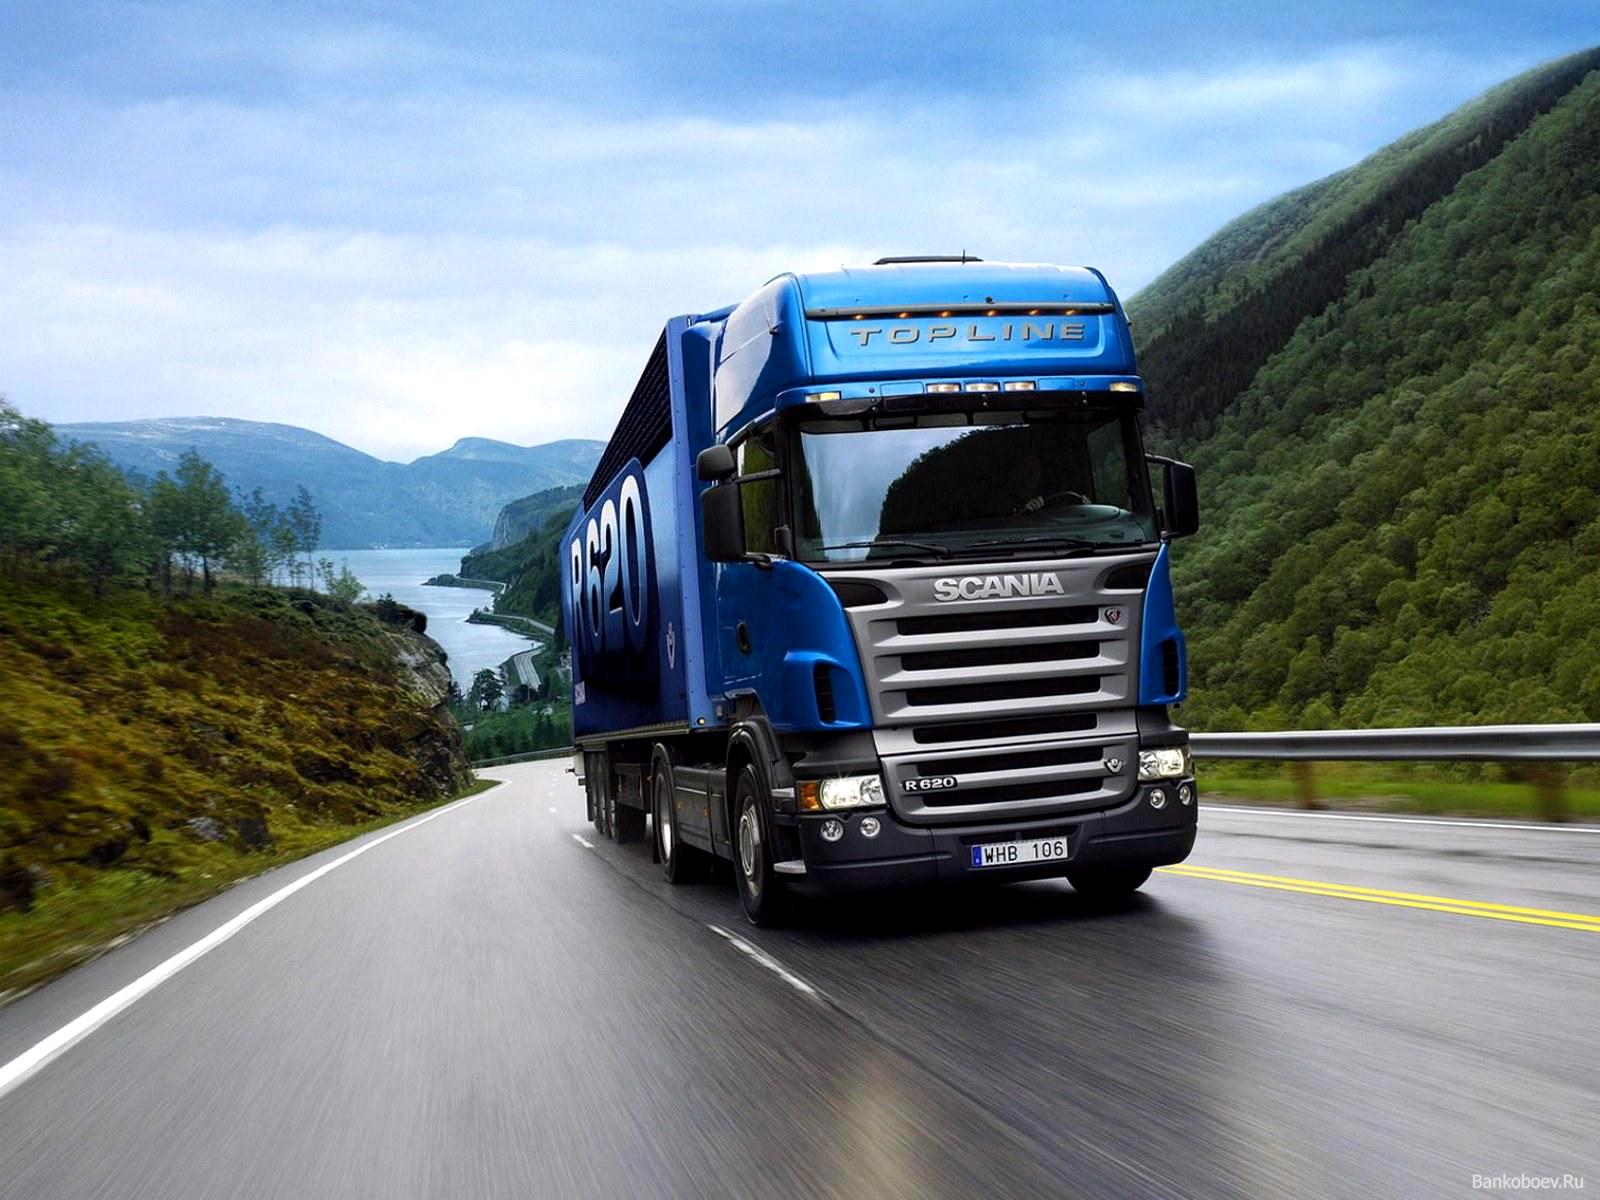 Free download Blue Truck Scania .wallpaperafari.com